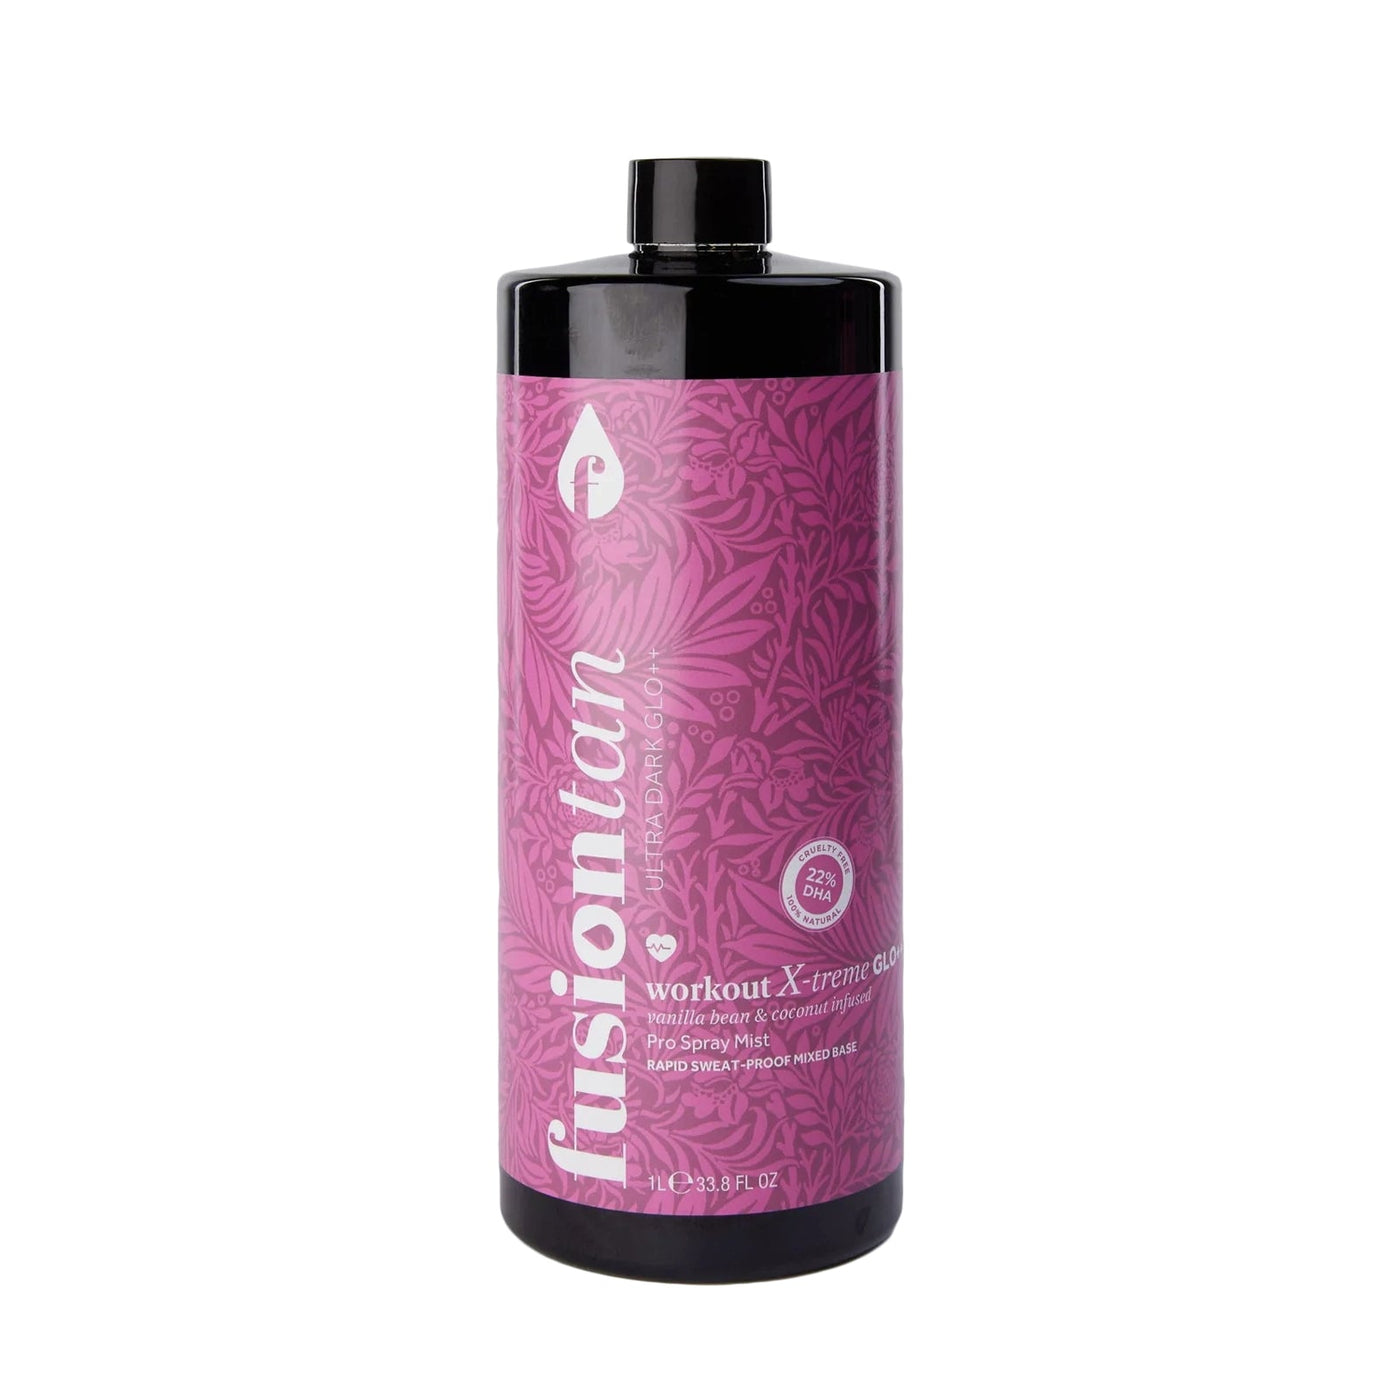 Fusion Tan Ultra Dark Workout X-treme GLO++ 22% Pro Spray Tan Mist